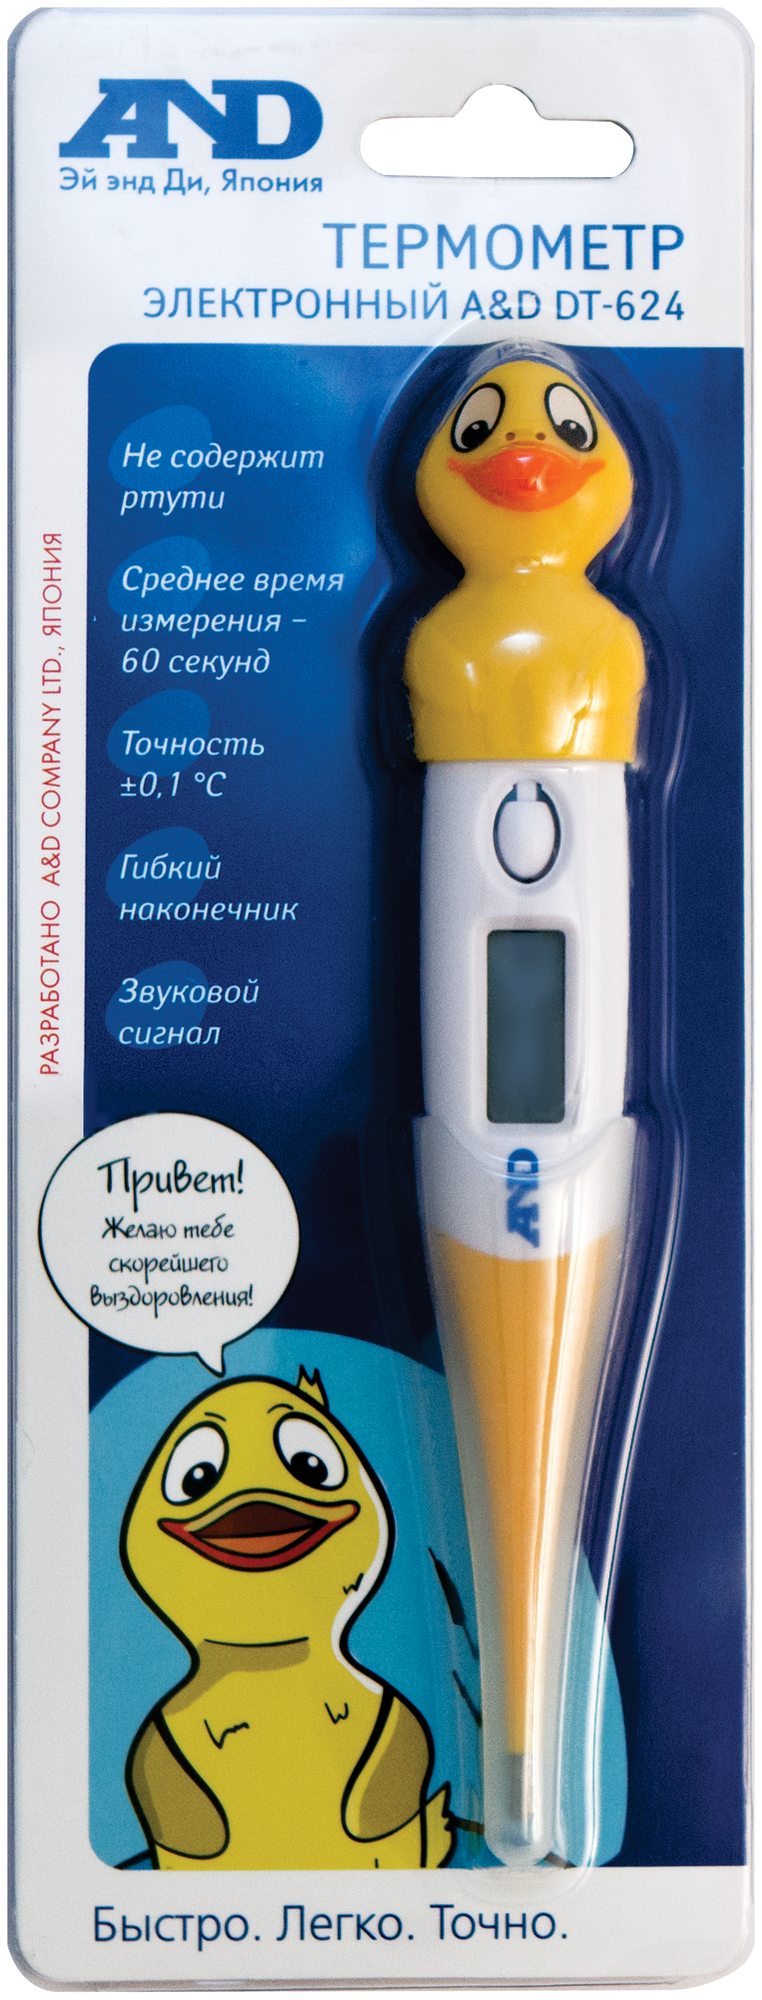 Термометр AND DT-624 электронный (держатель-утка)